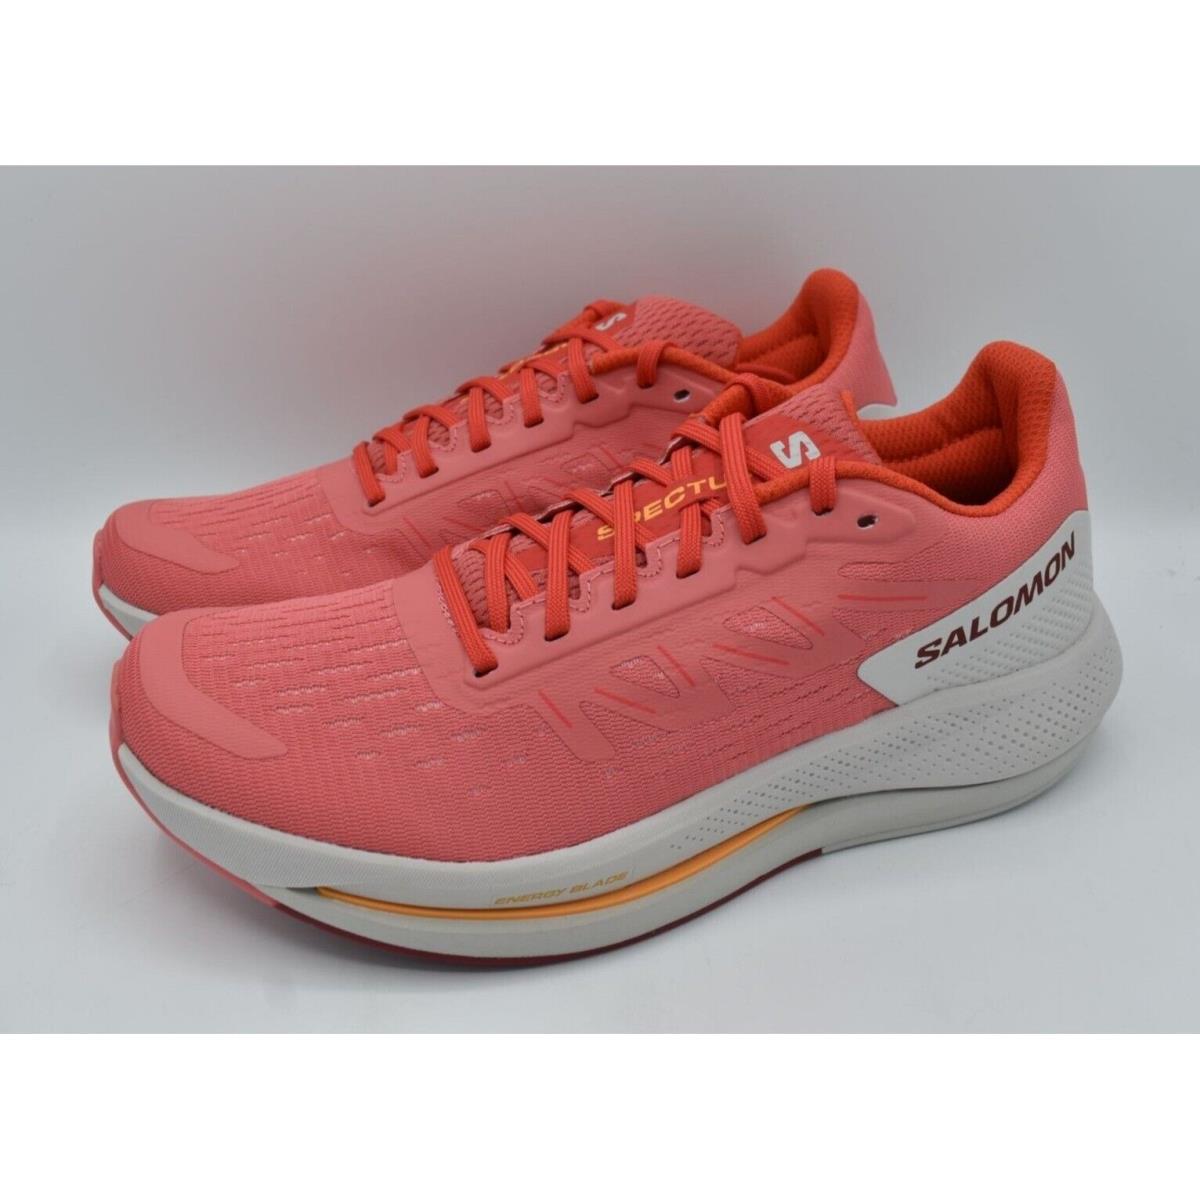 Salomon Womens Size 8.5 Spectur Tea Rose Lunar Rock Running Shoes Sneakers